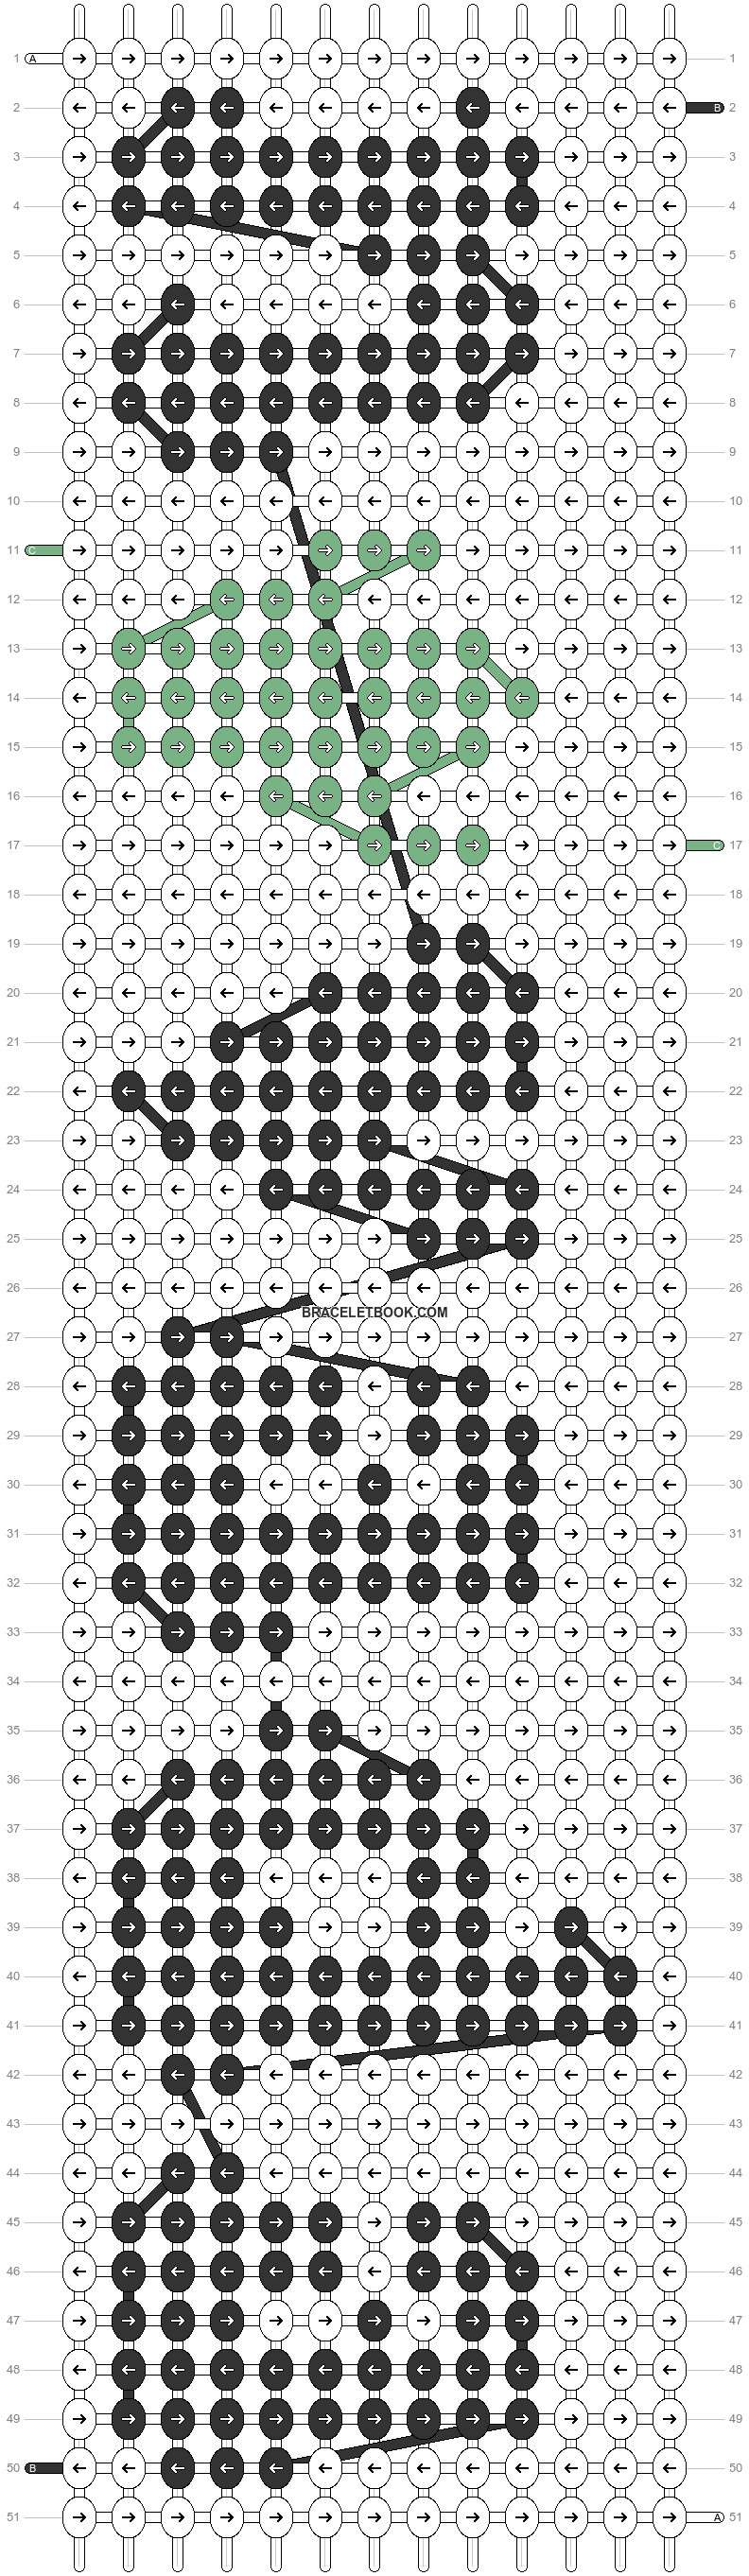 Alpha pattern #54512 variation #93171 pattern